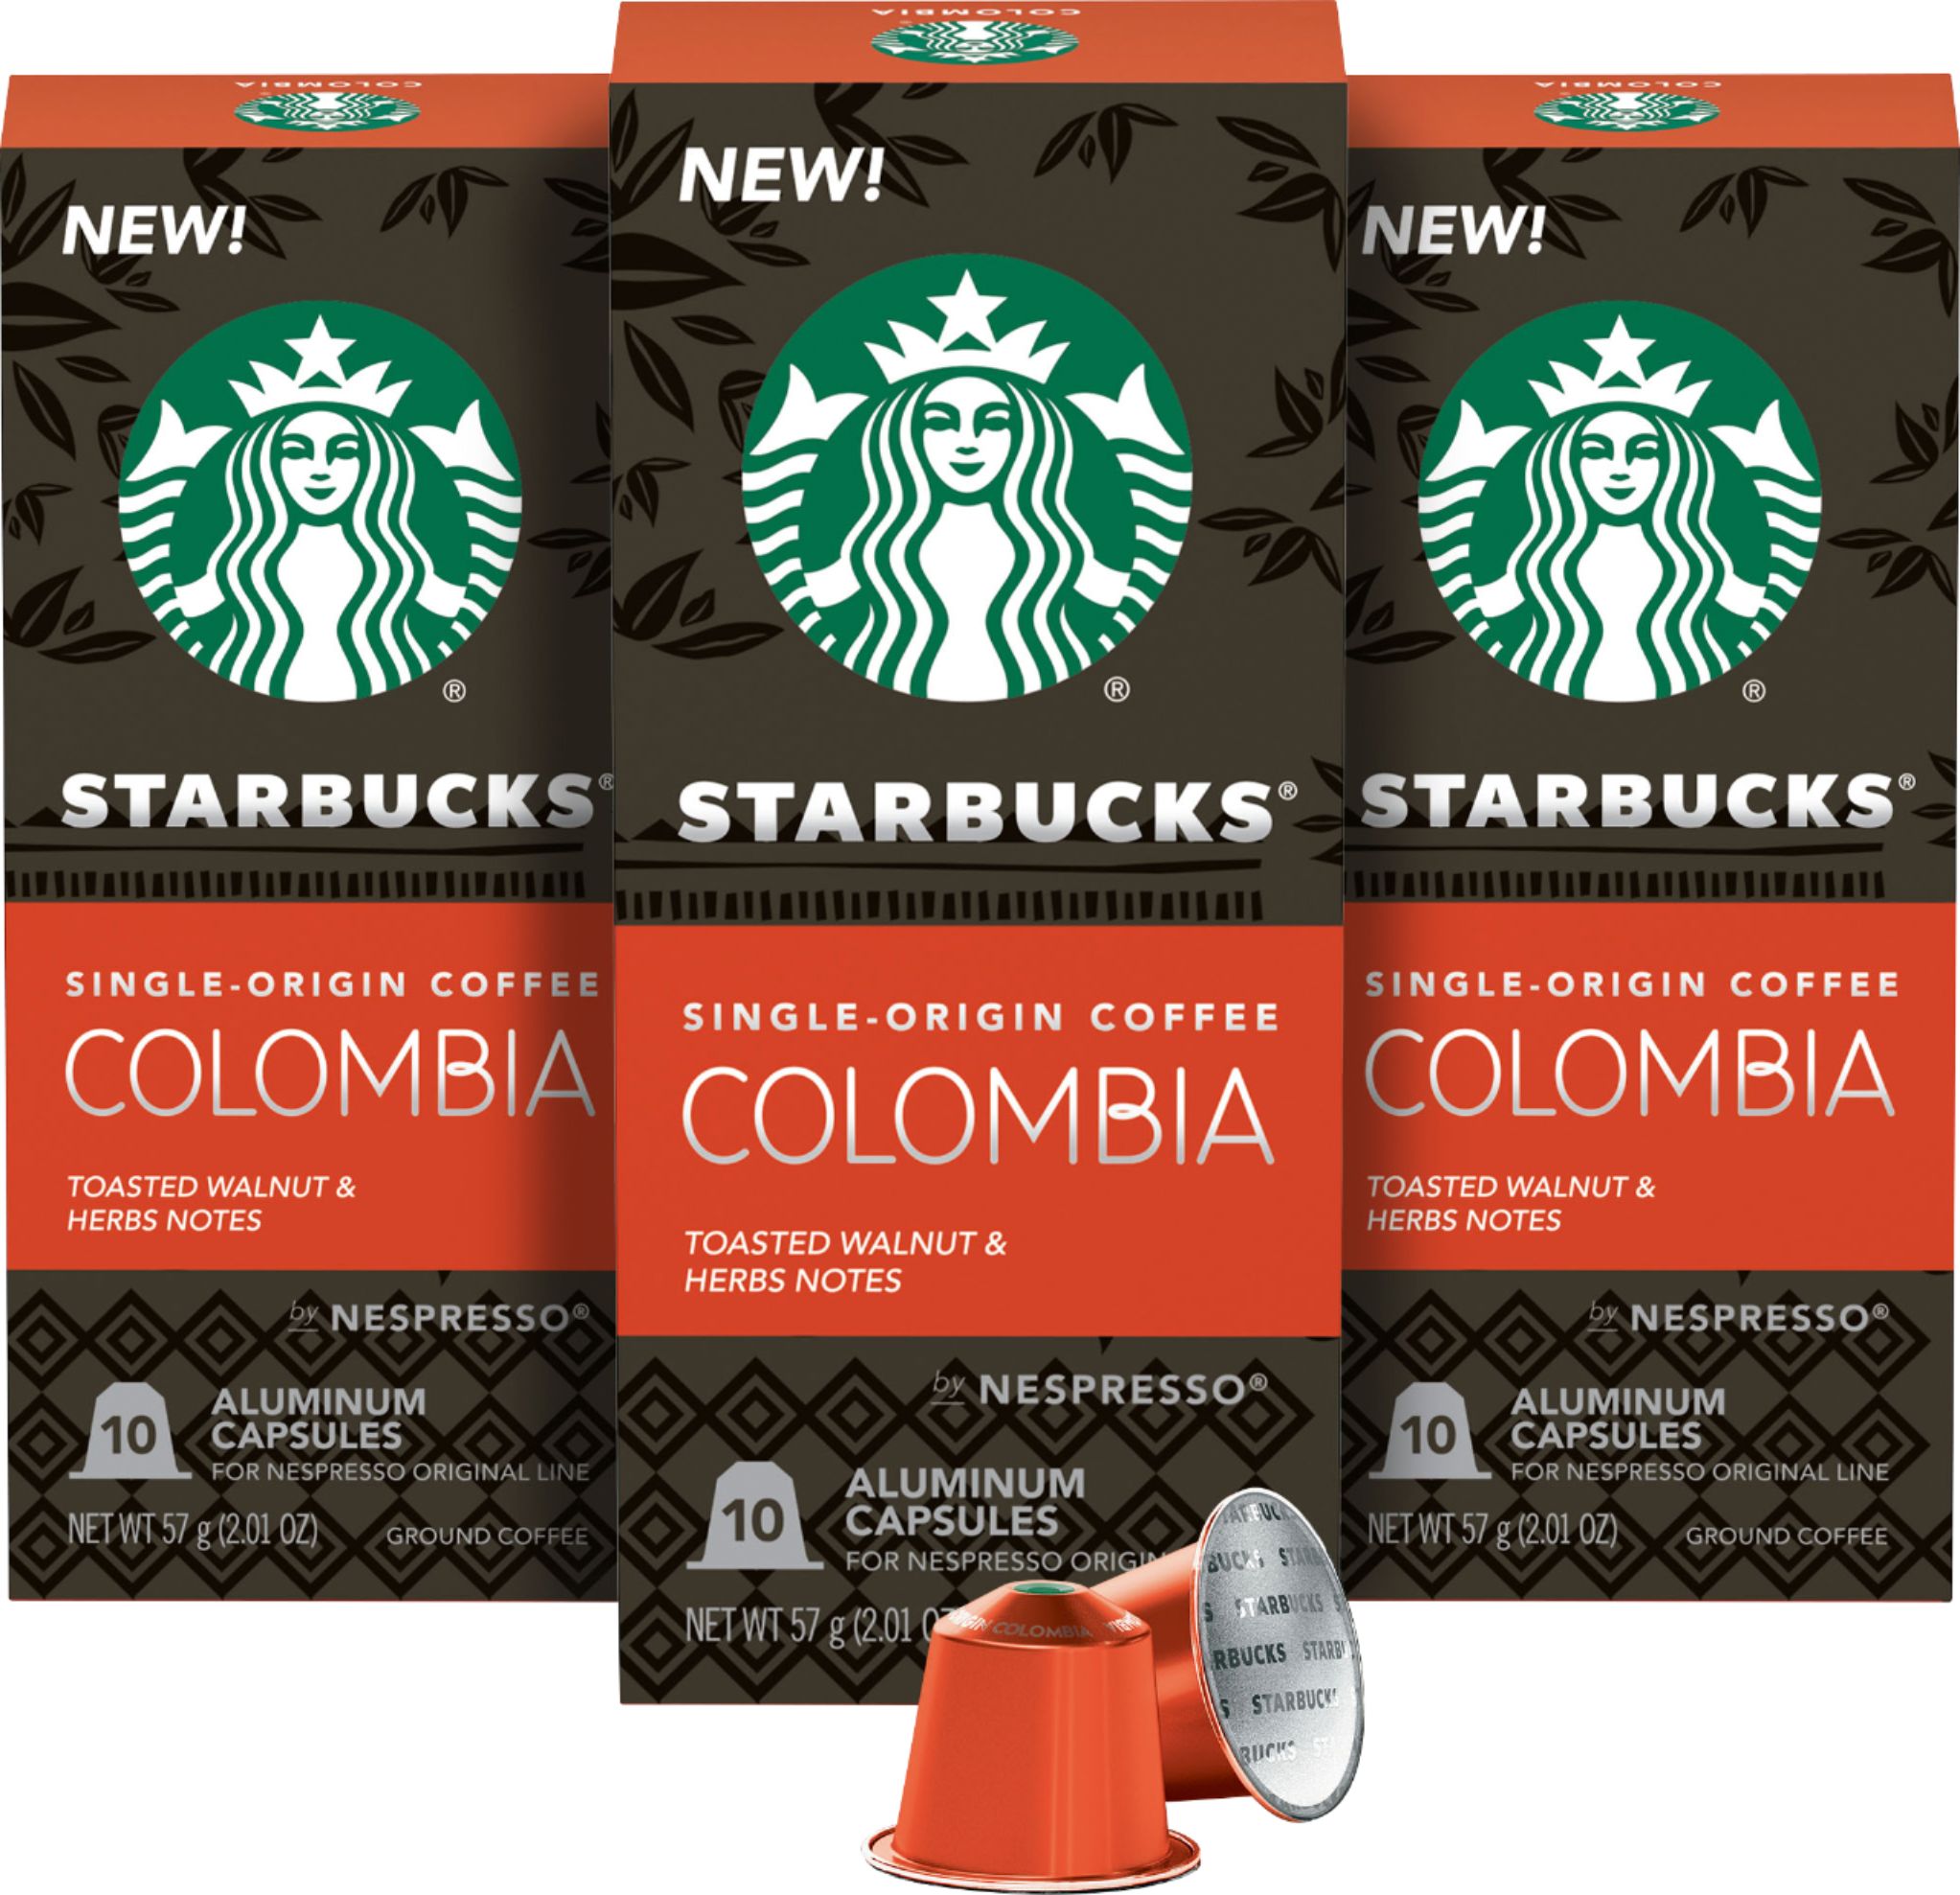 10 Capsules Colombia Single Origine Coffee Starbucks by Nespresso 57g